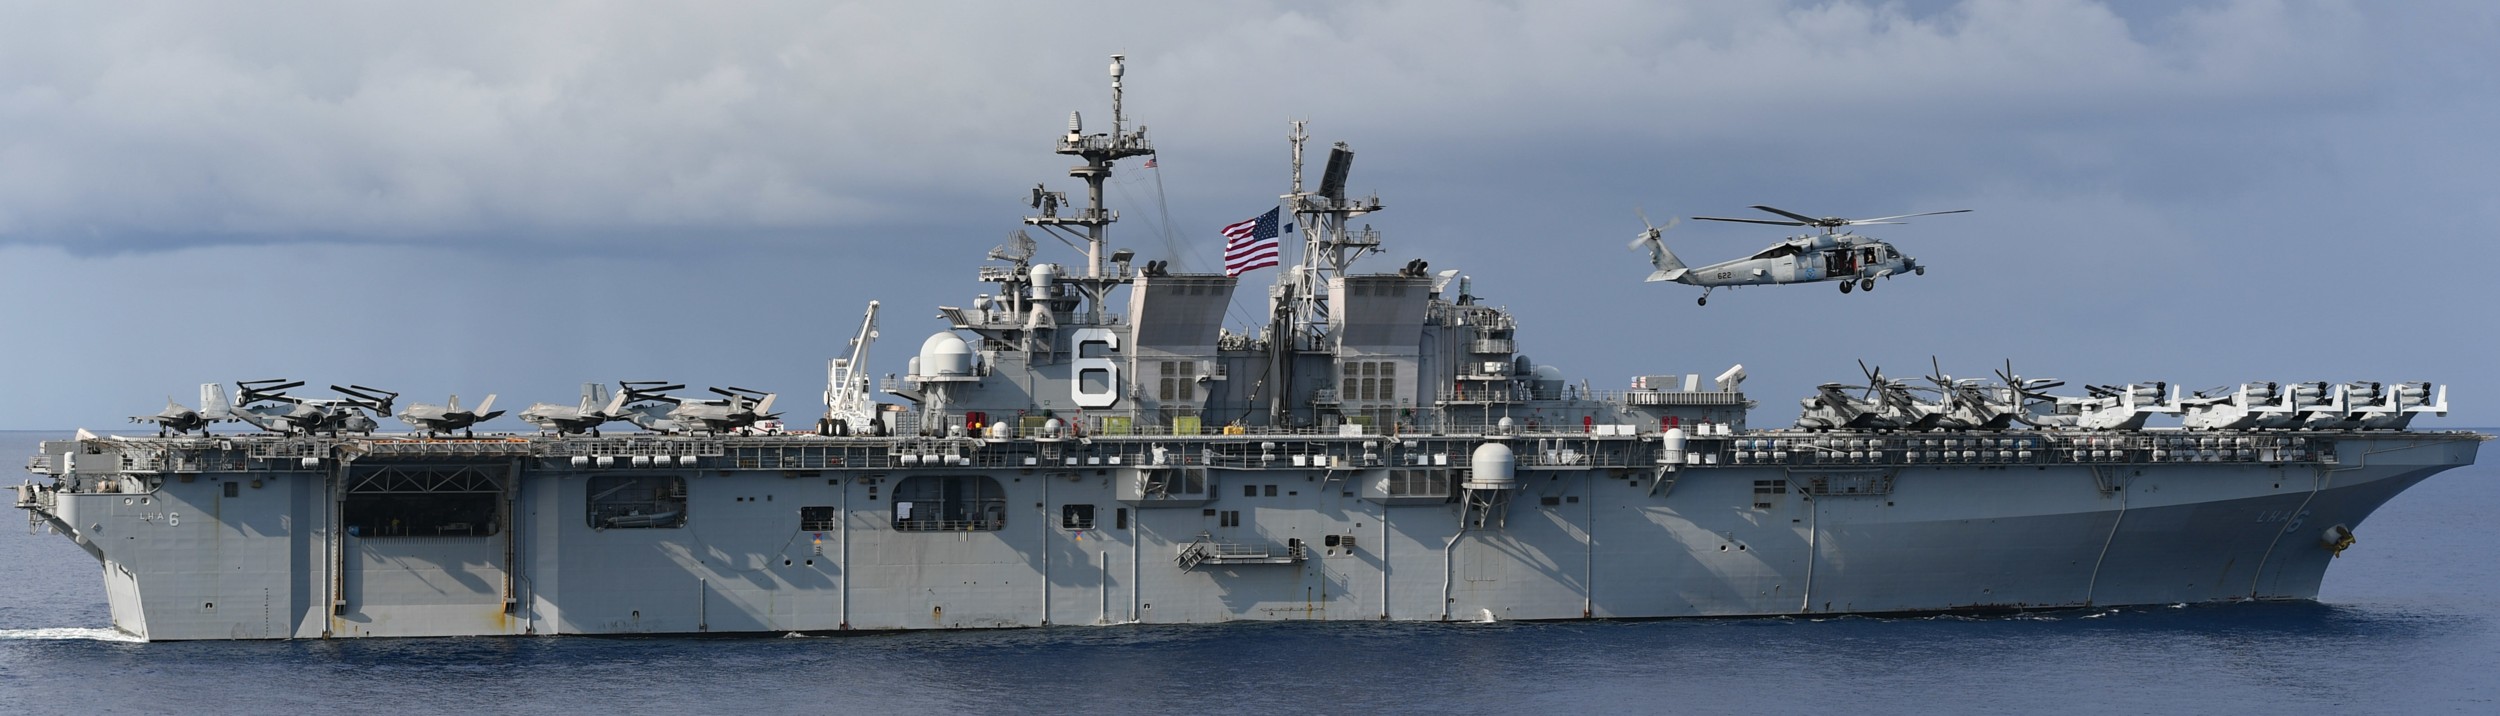 lha-6 uss america amphibious assault ship landing us navy marines vmm-265 170